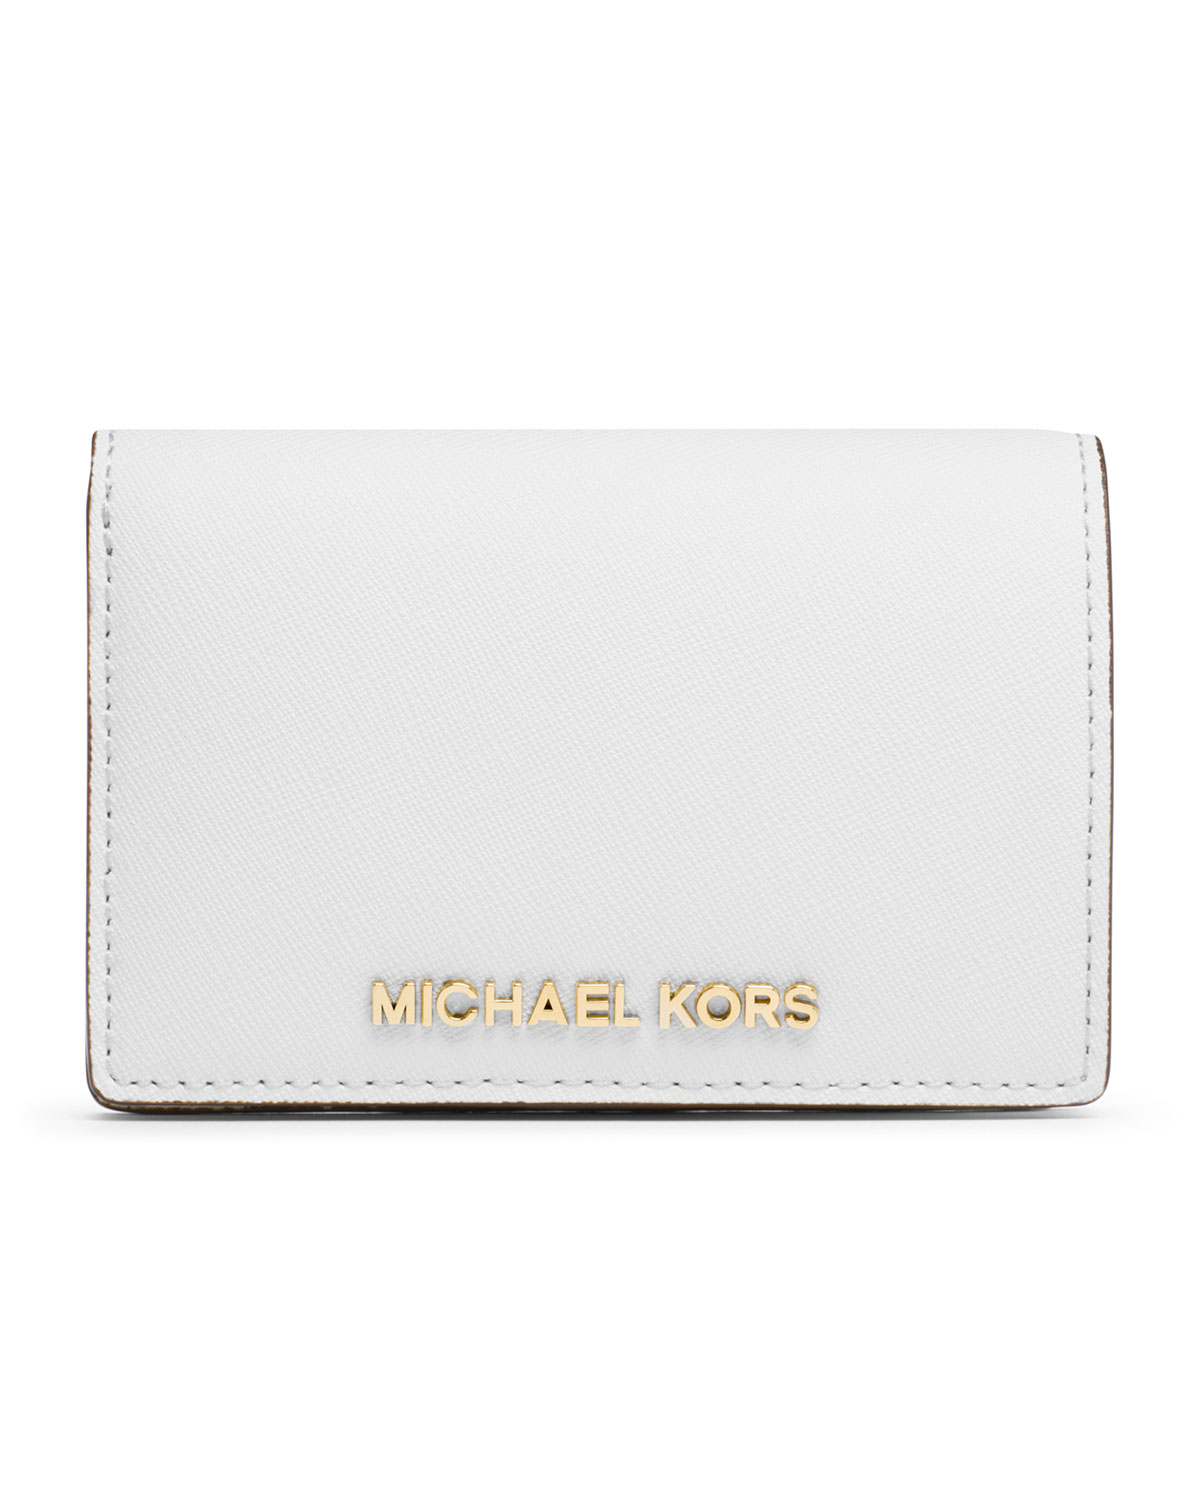 Lyst - Michael Kors Michael Medium Jet Set Travel Slim Wallet in White